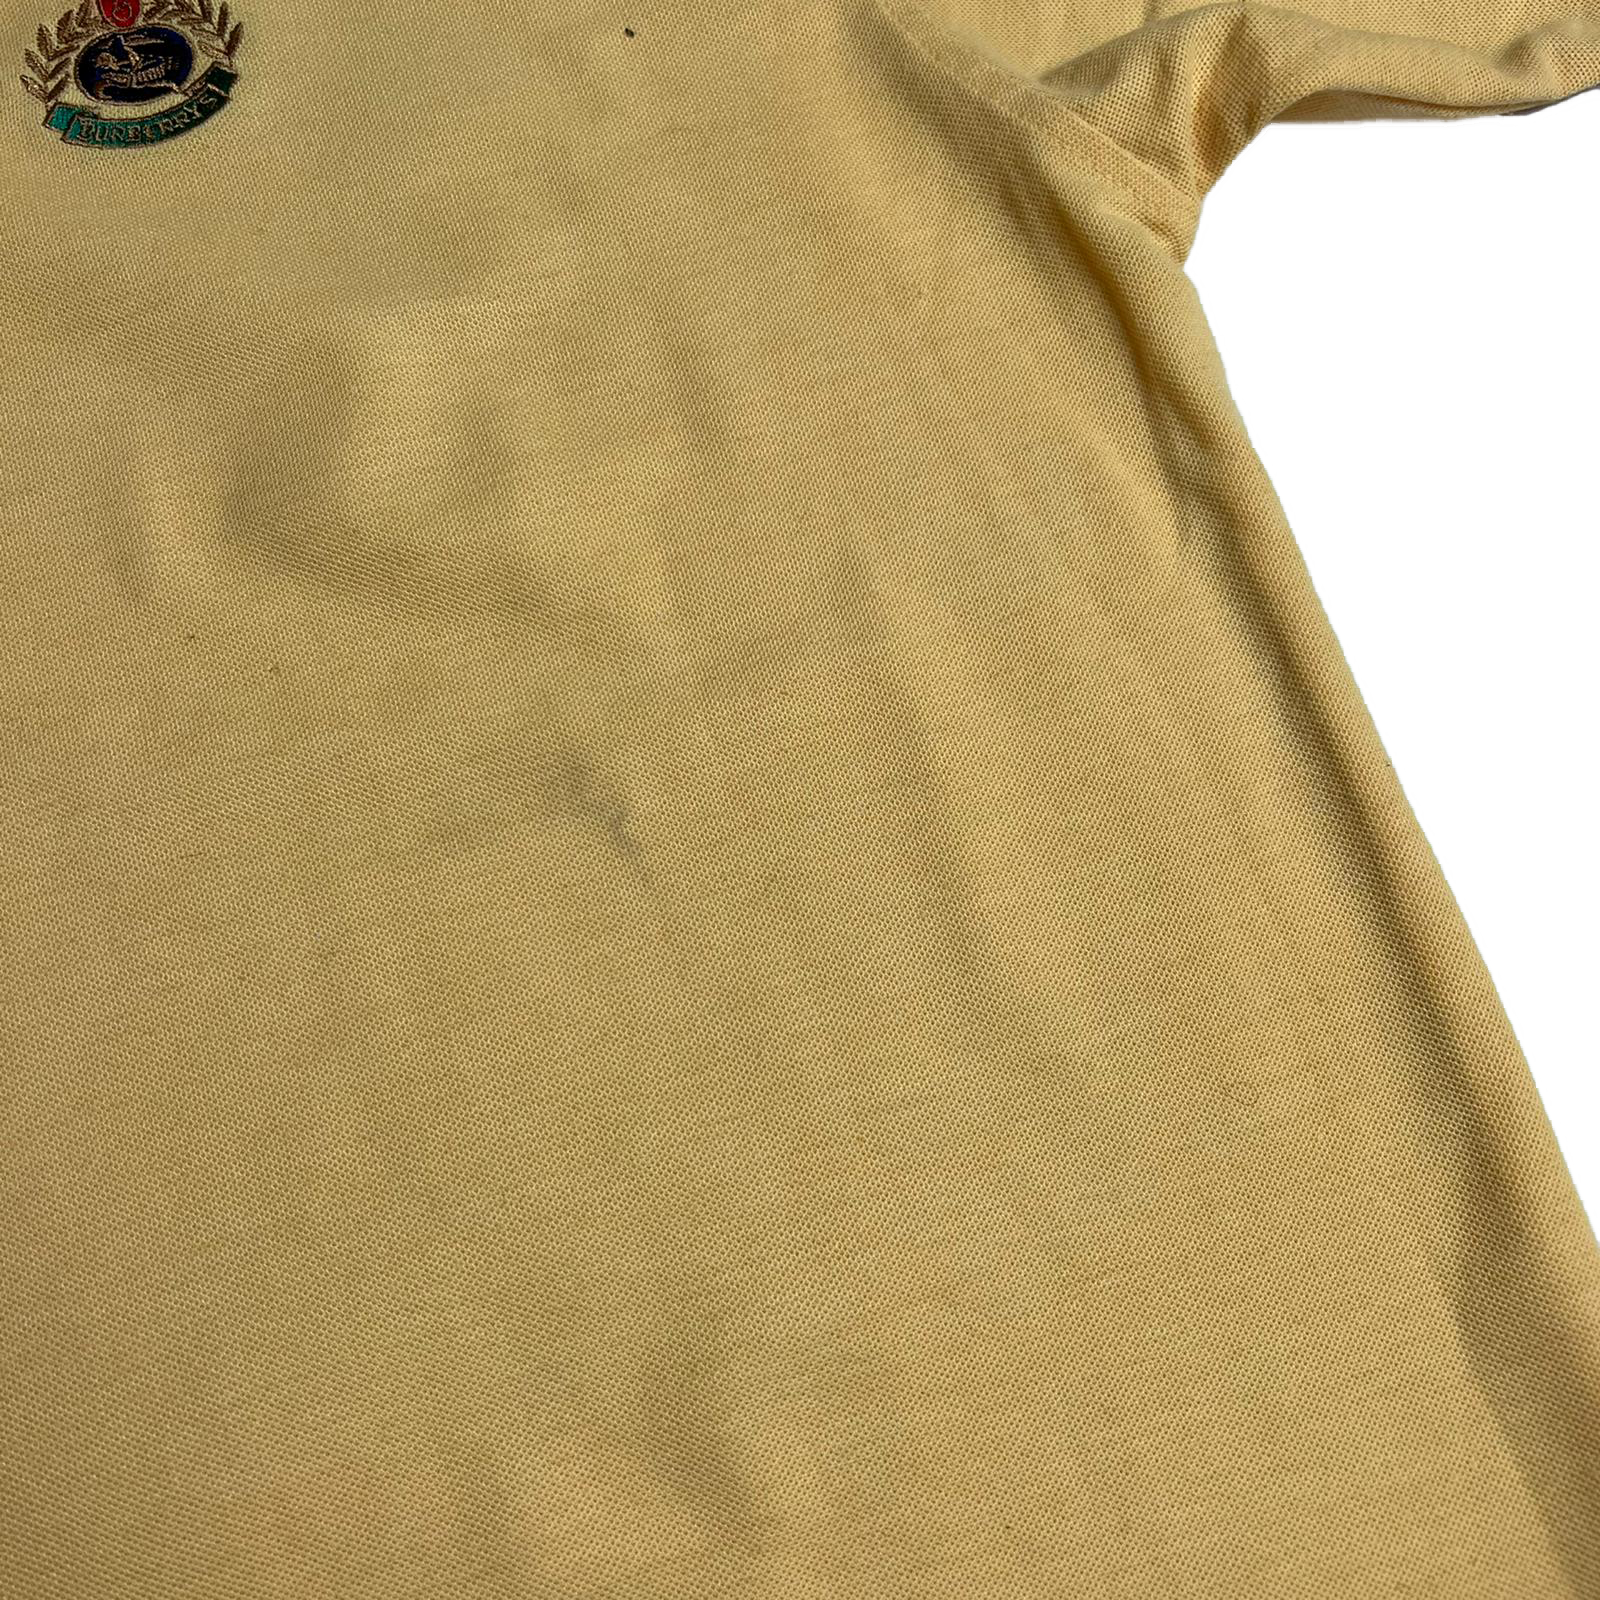 90's Burberry polo shirt